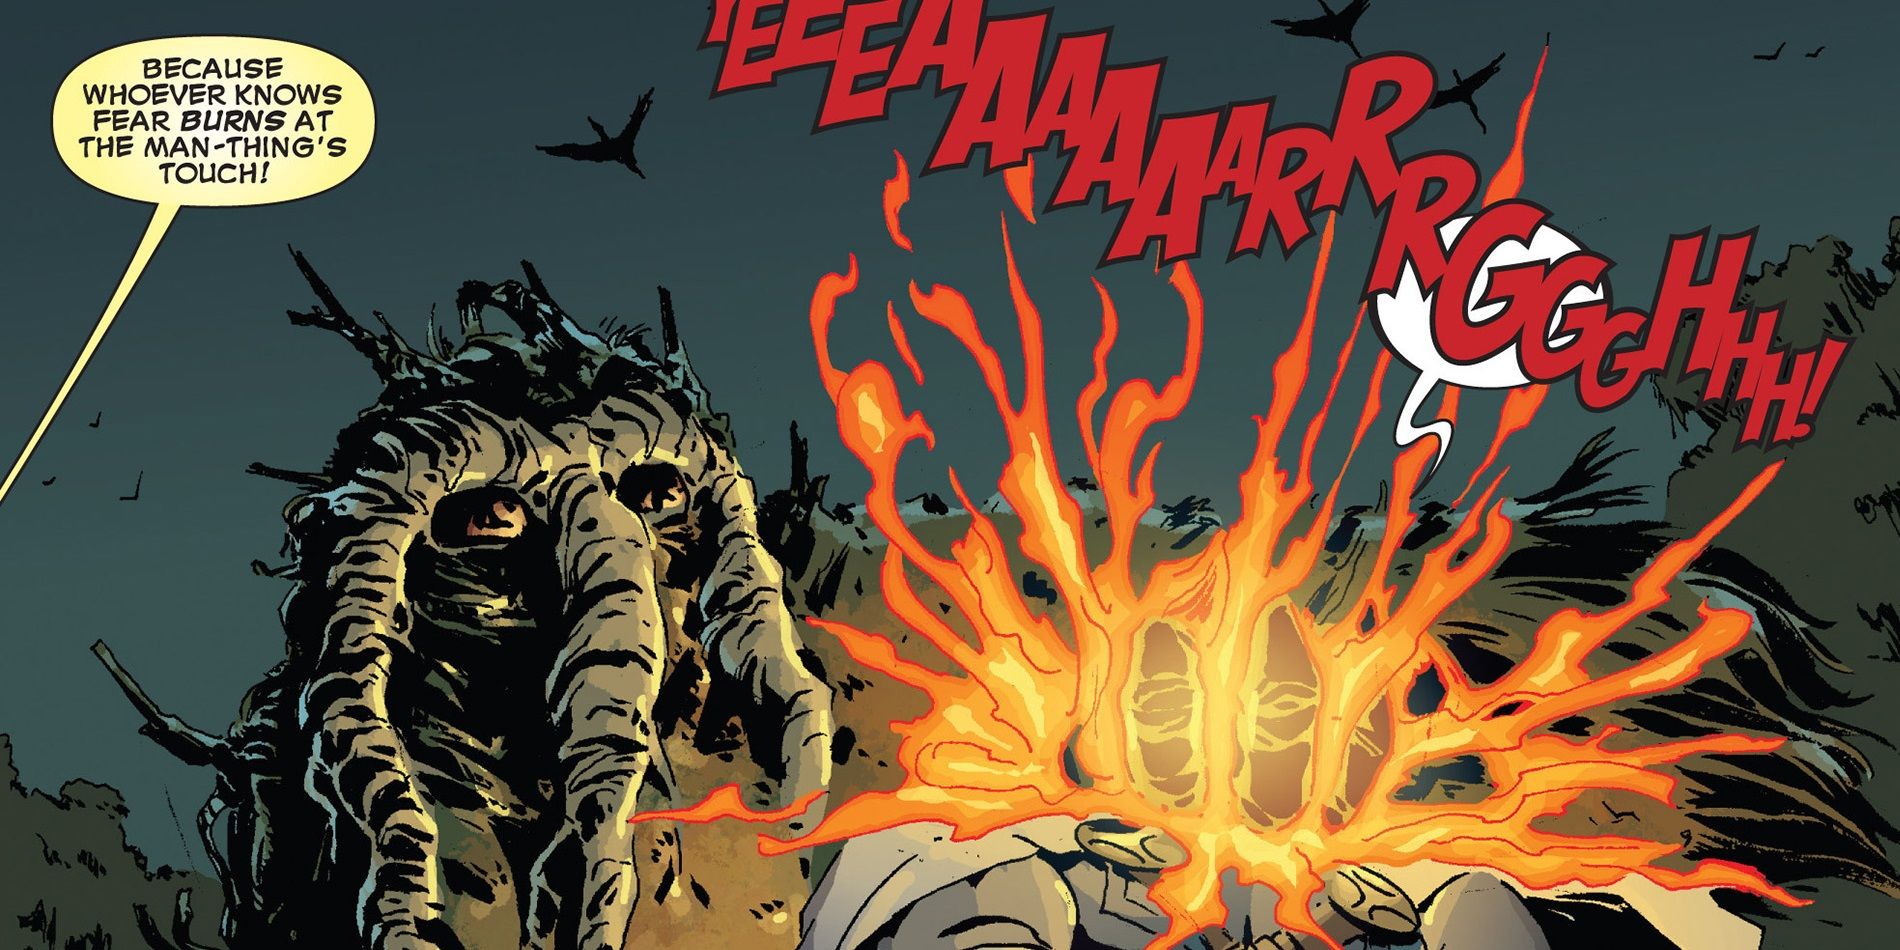 Man-Thing burns the Taskmaster to help Deadpool